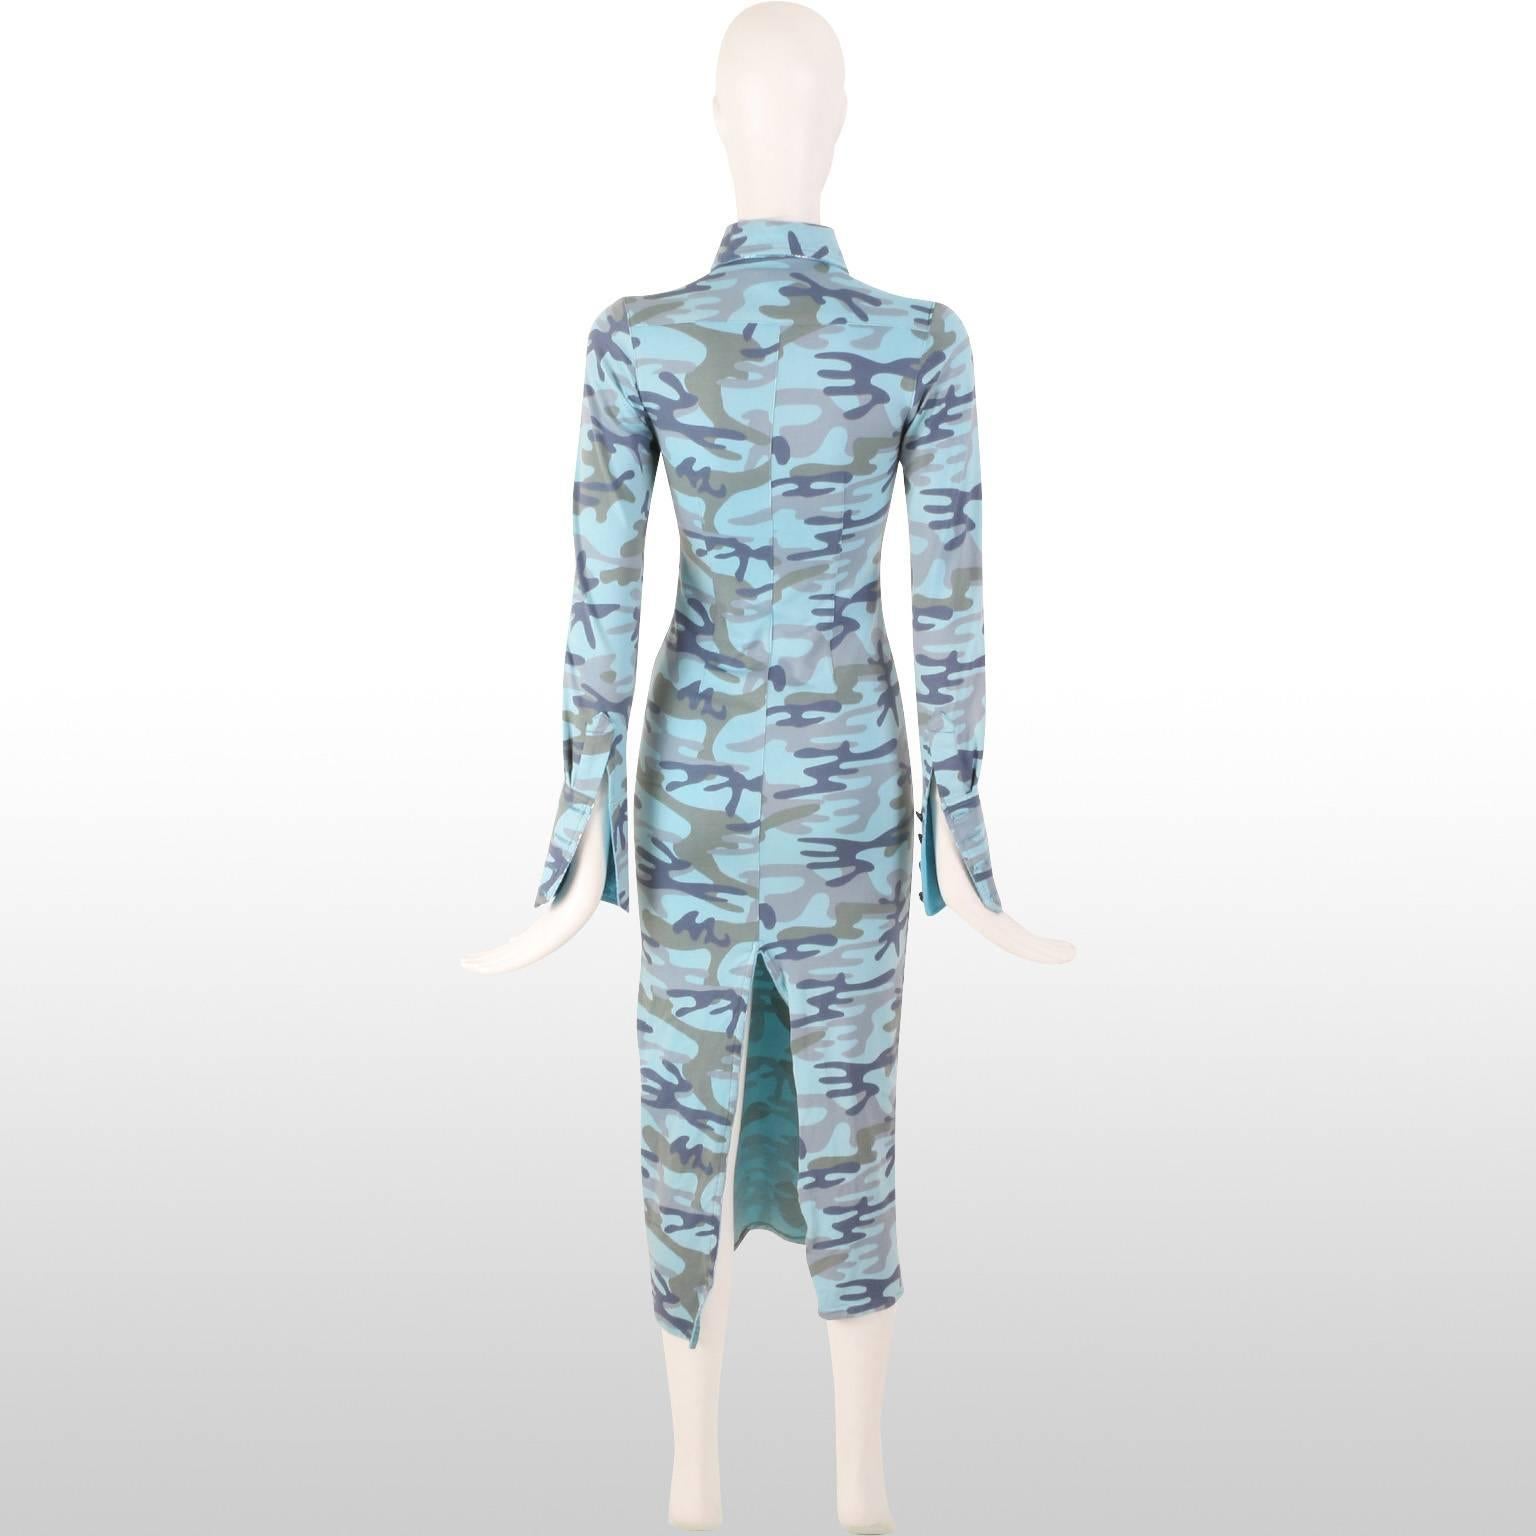 Original Voyage Blue Camouflage Shirt Dress Approx Size UK 6 1